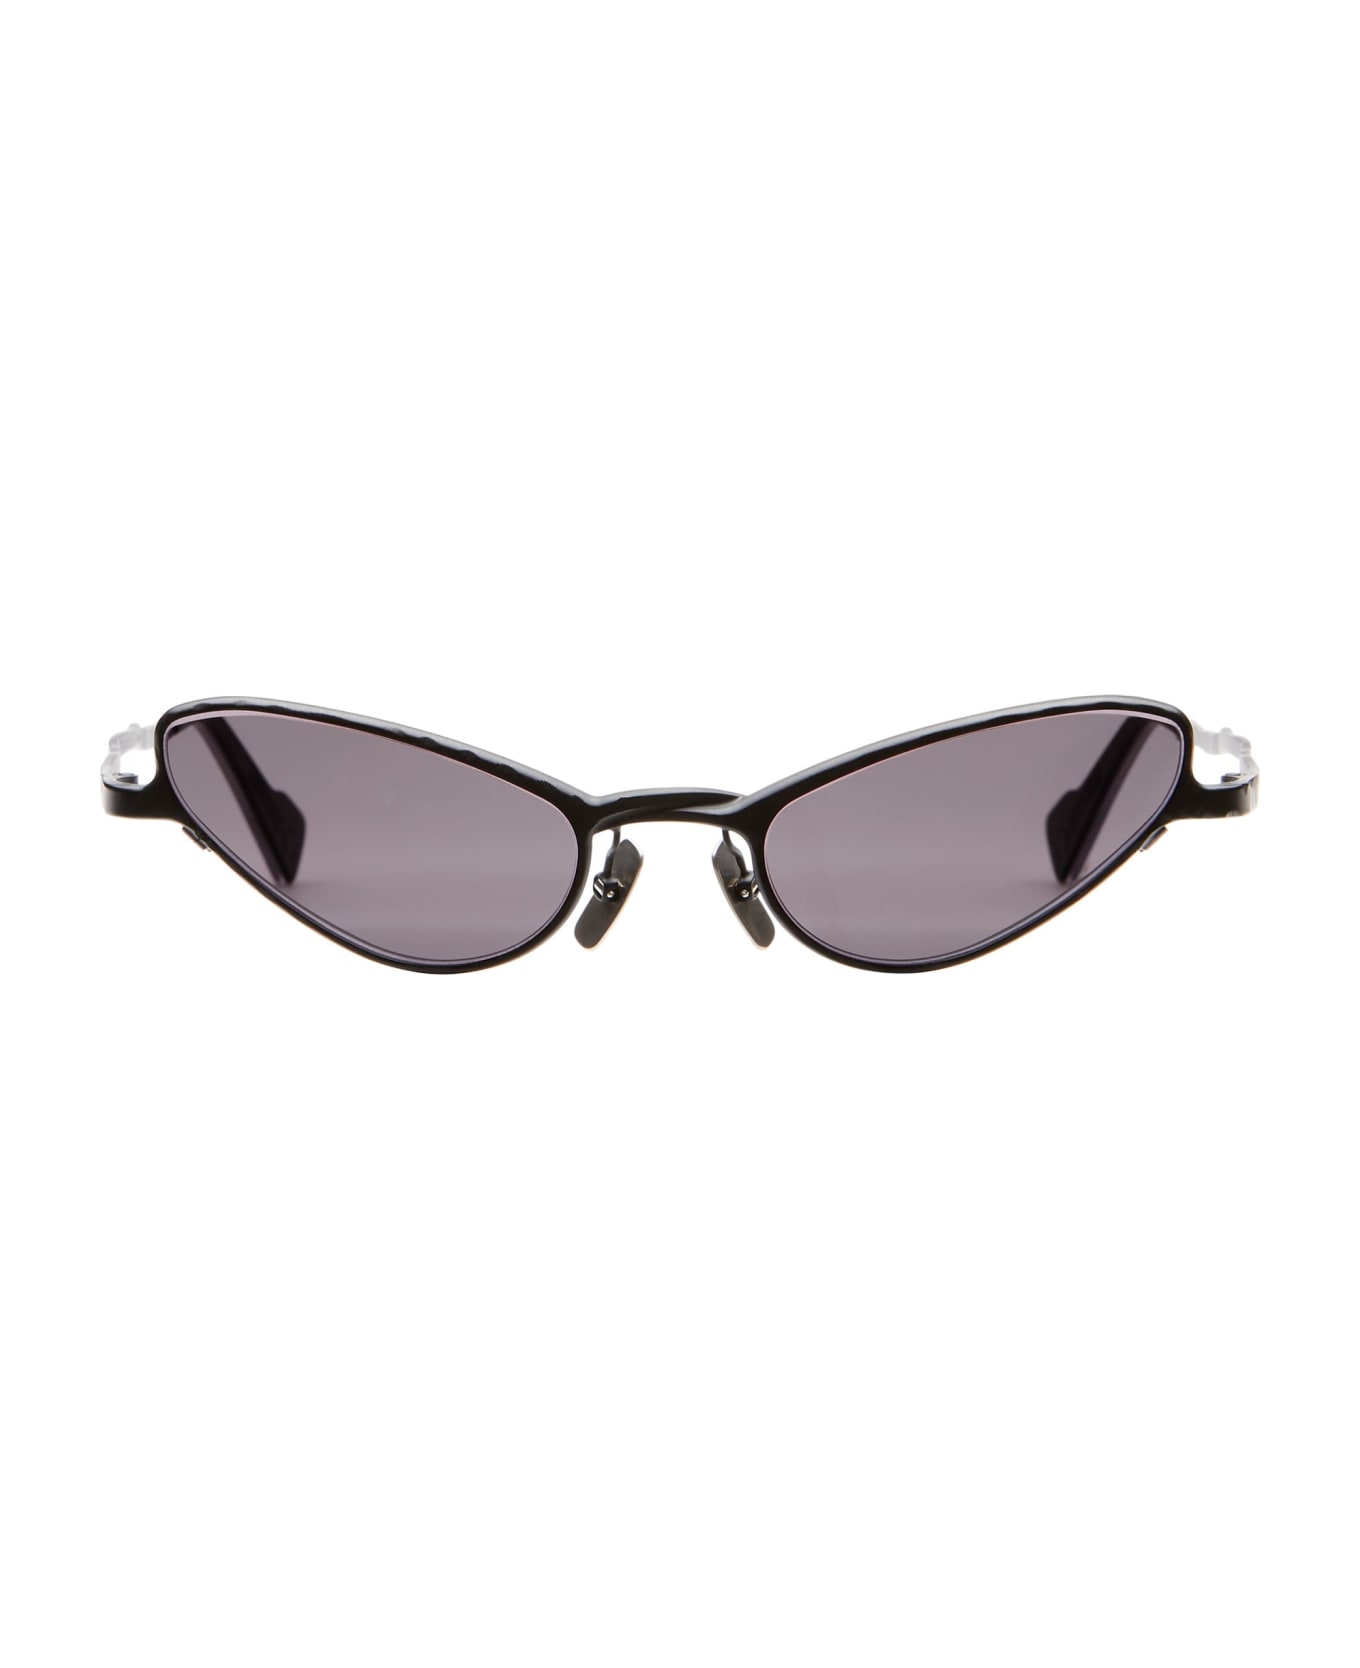 Kuboraum Mask Z22 - Black Matte Sunglasses - Matte black